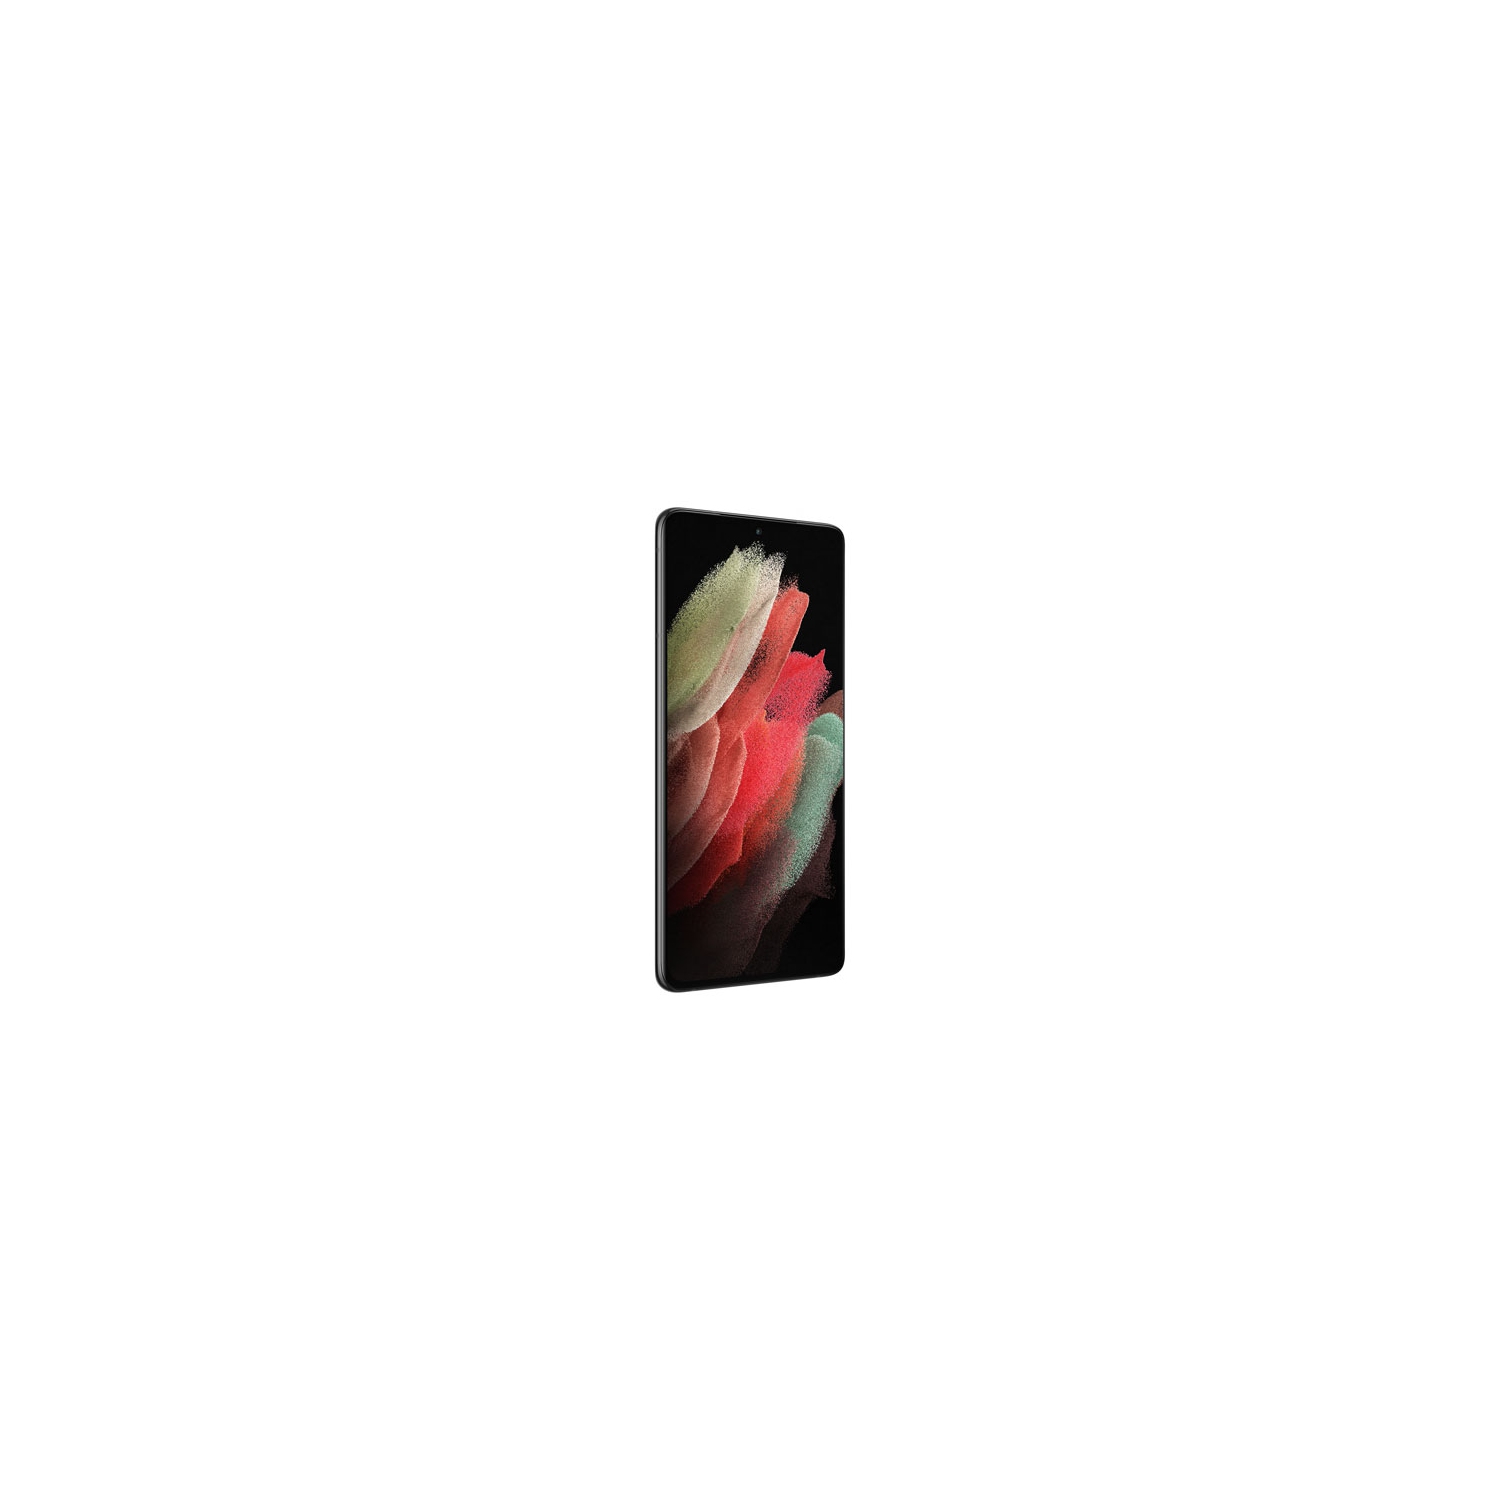 Refurbished (Good) - Samsung Galaxy S21 Ultra 5G 256GB - Phantom Black - Unlocked